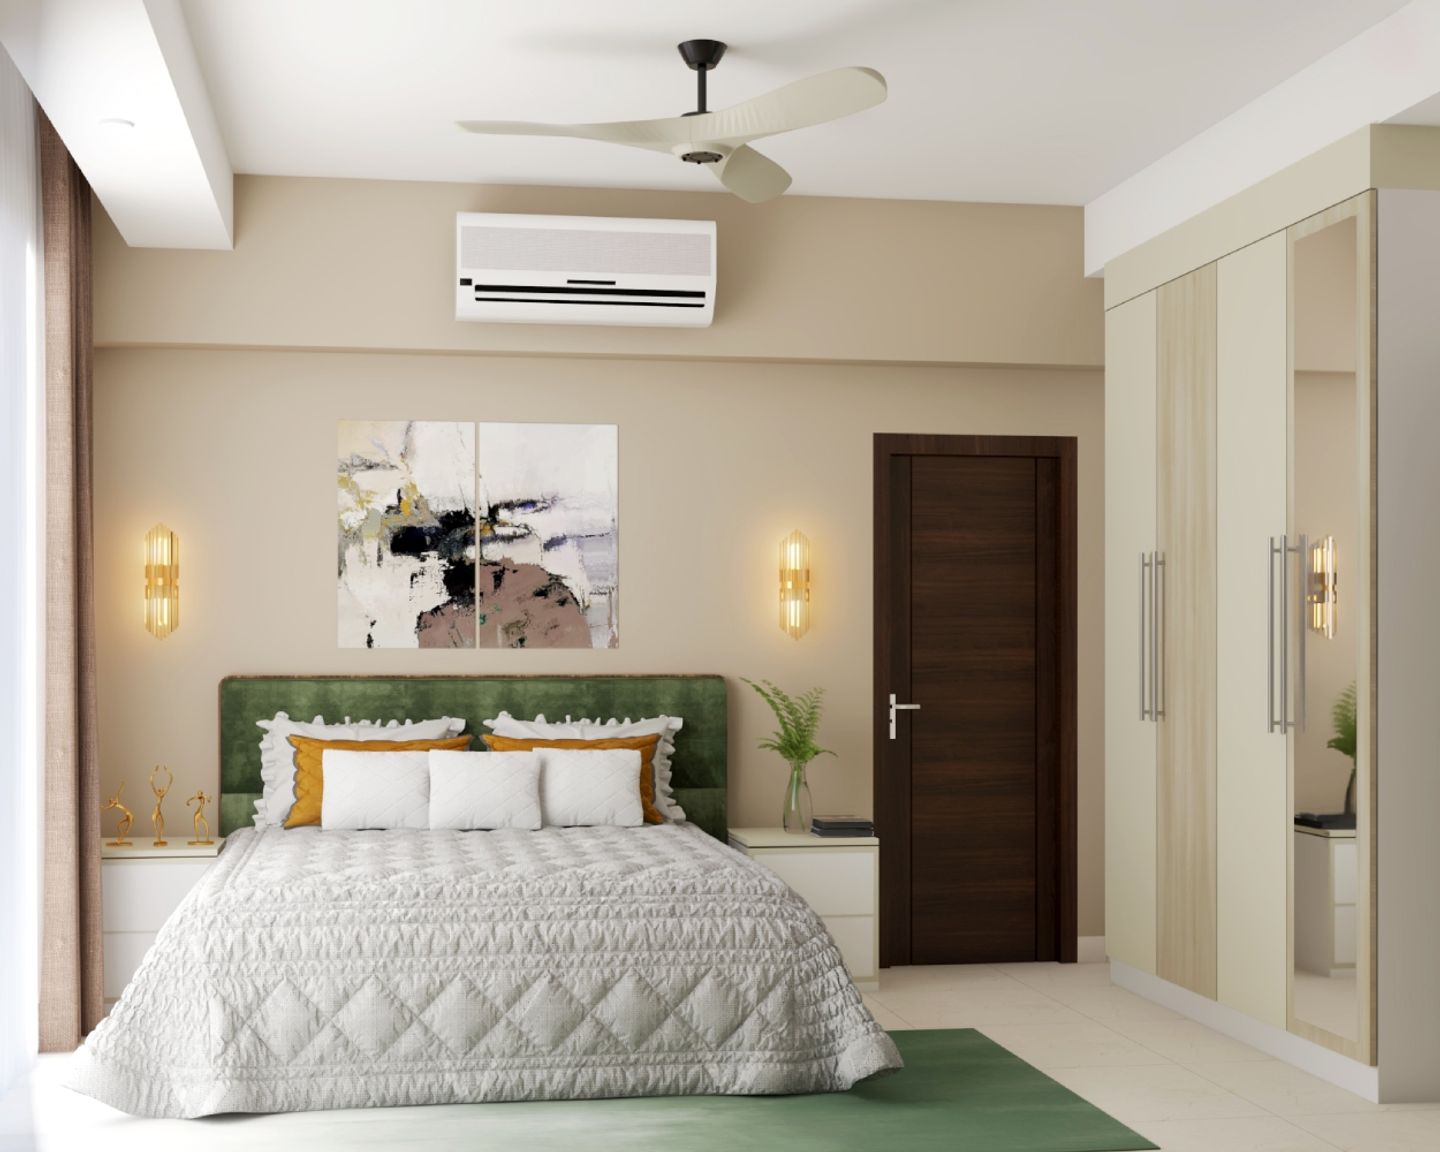 Master Bedroom Design With Green Headboard - Livspace